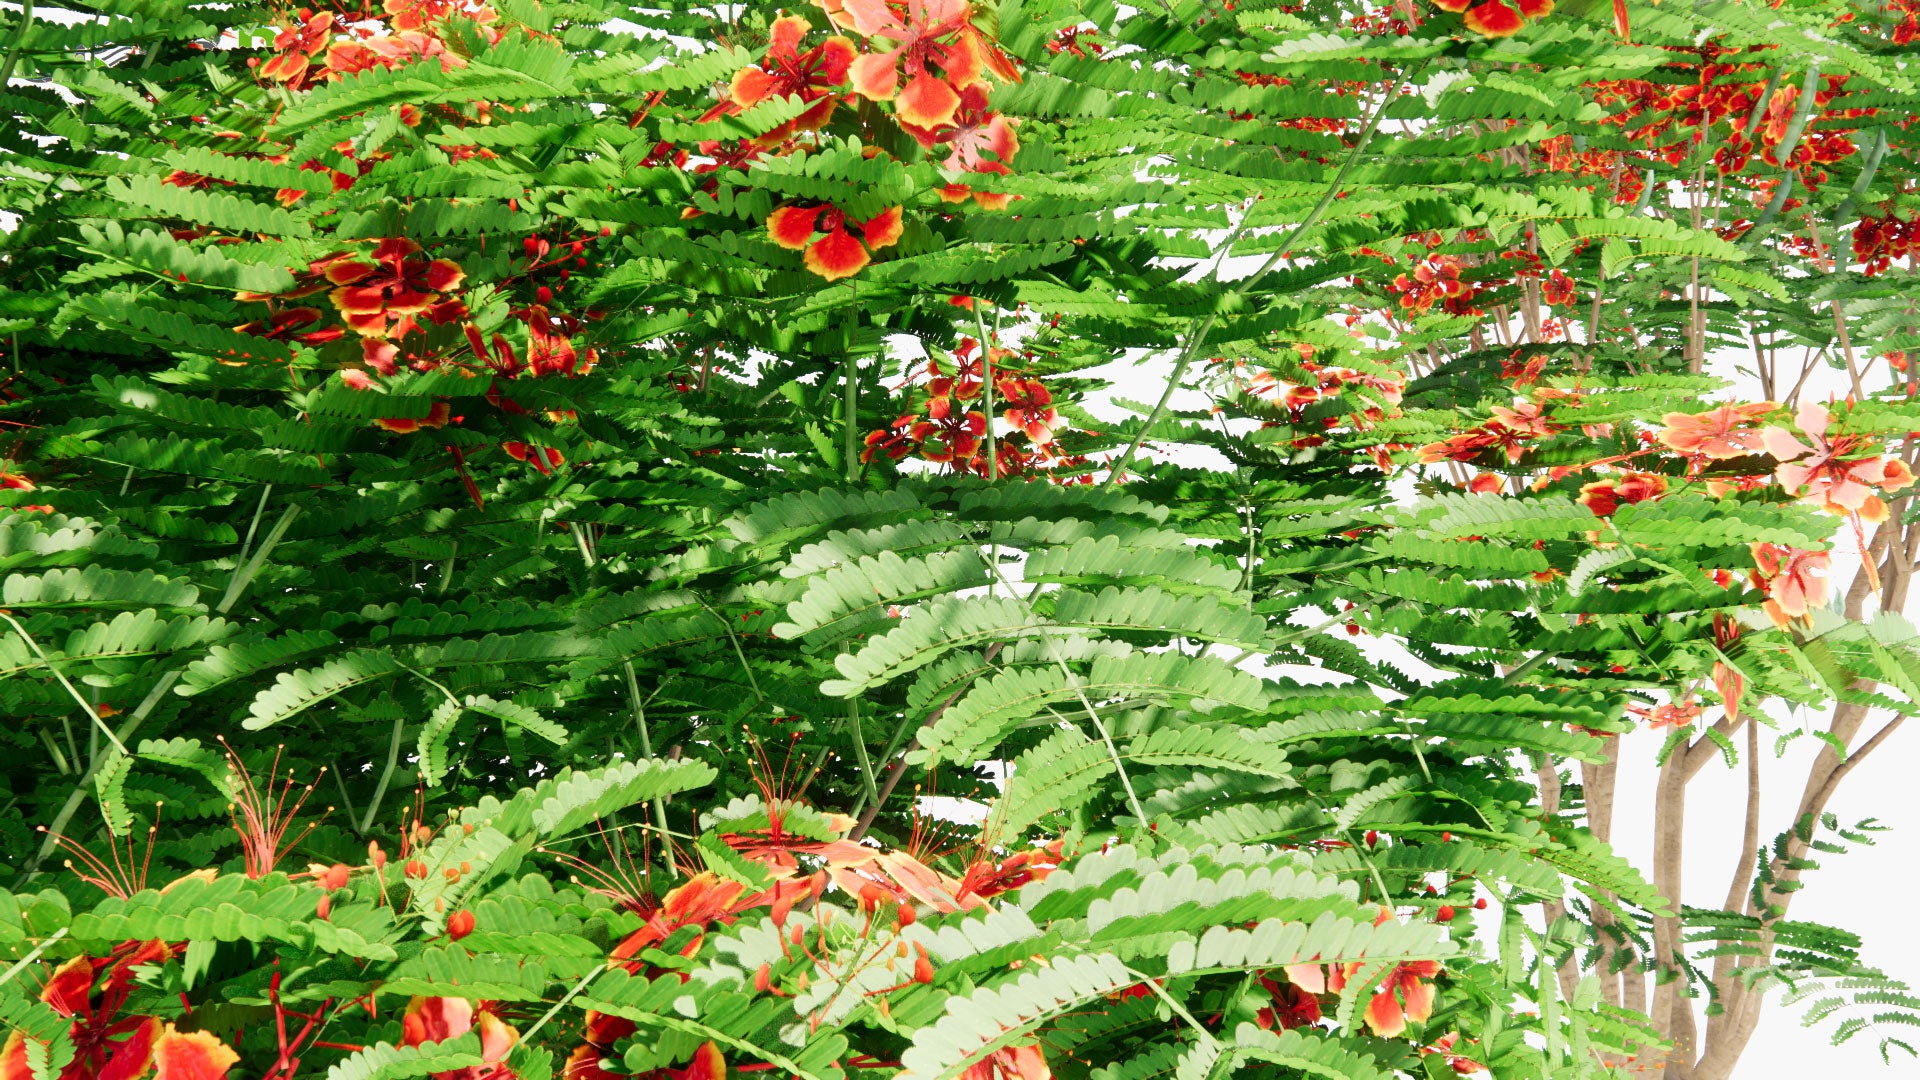 Low Poly Caesalpinia Pulcherrima - Shankasur, Poinciana, Peacock Flower, Red Bird of Paradise, Mexican Bird of Paradise, Dwarf Poinciana, Pride of Barbados, Flos Pavonis, Flamboyant-de-Jardin (3D Model)